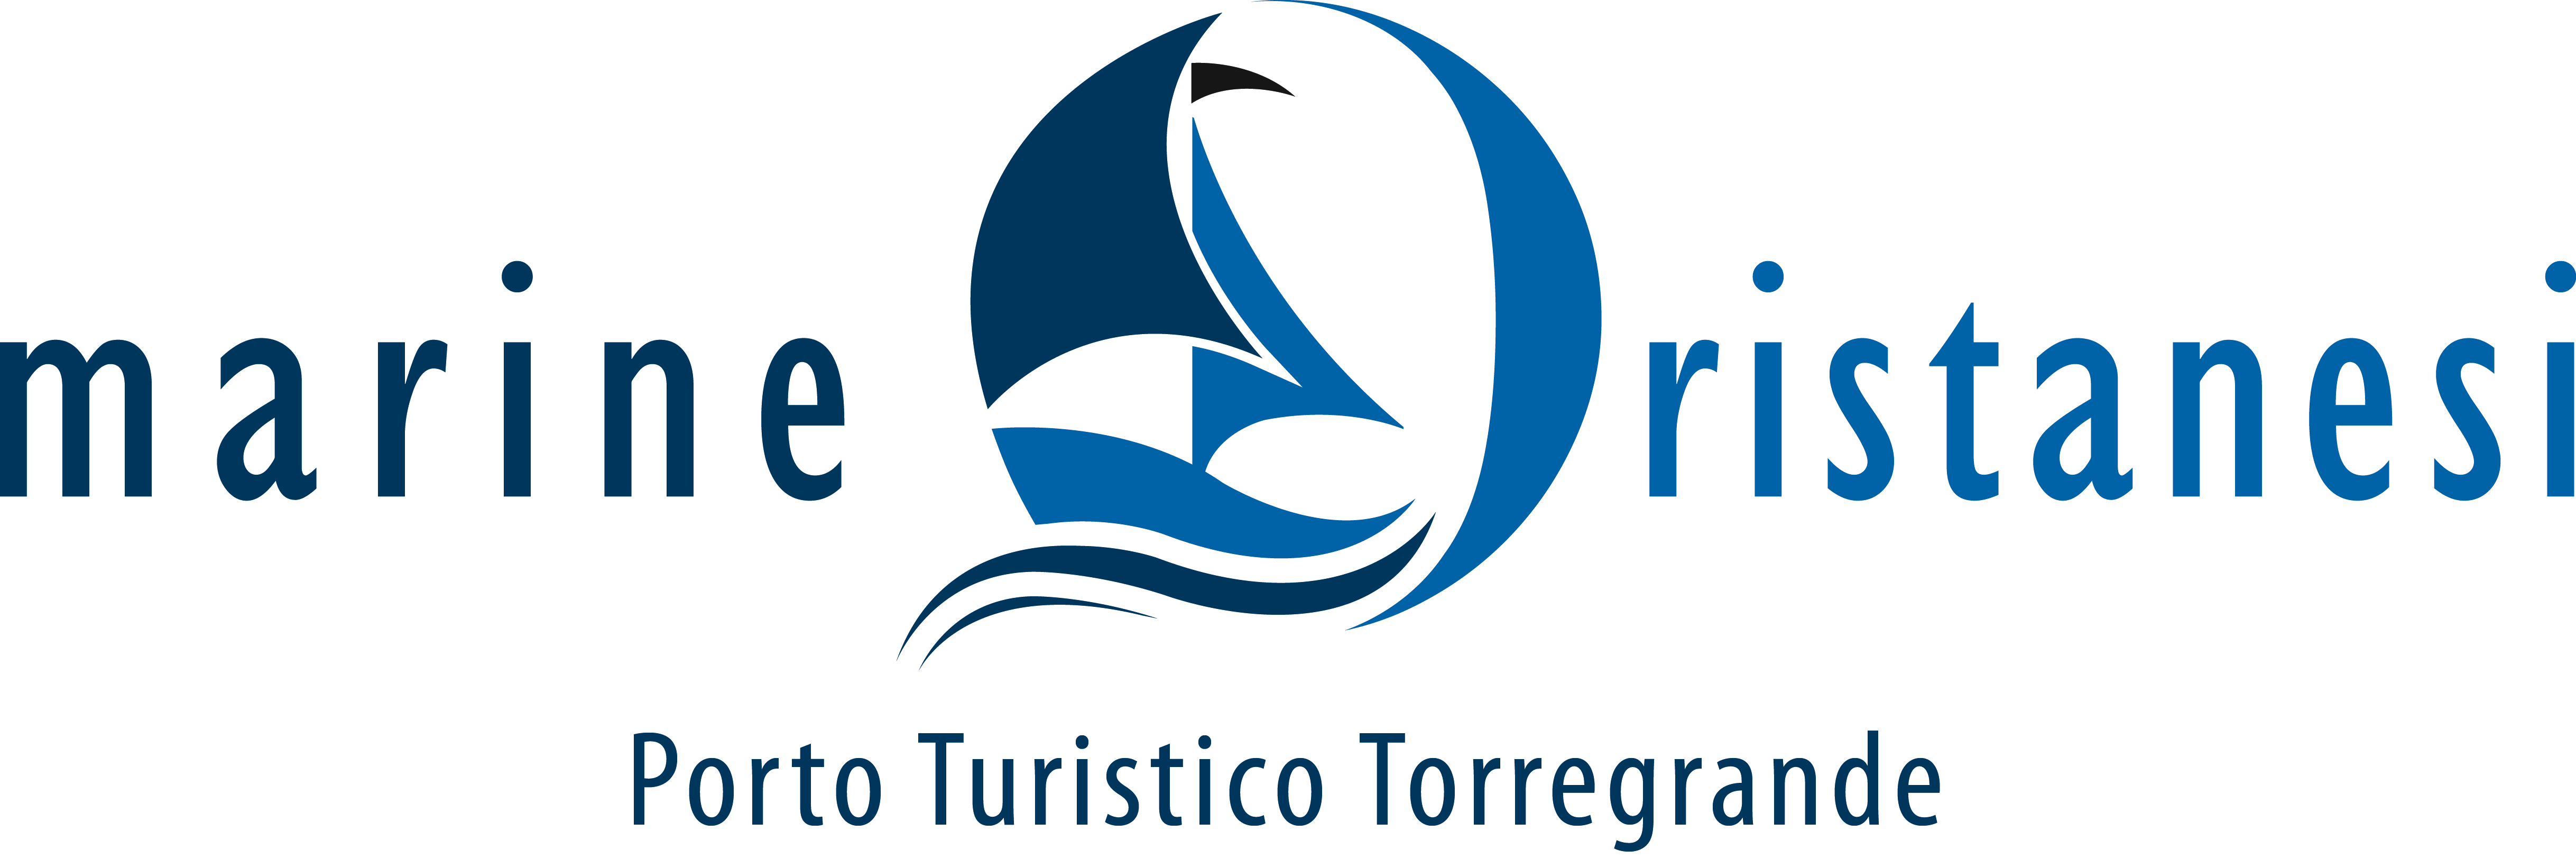 https://www.openwaterchallenge.it/owc/wp-content/uploads/2021/06/Logo-big-marine_oristanesi.png